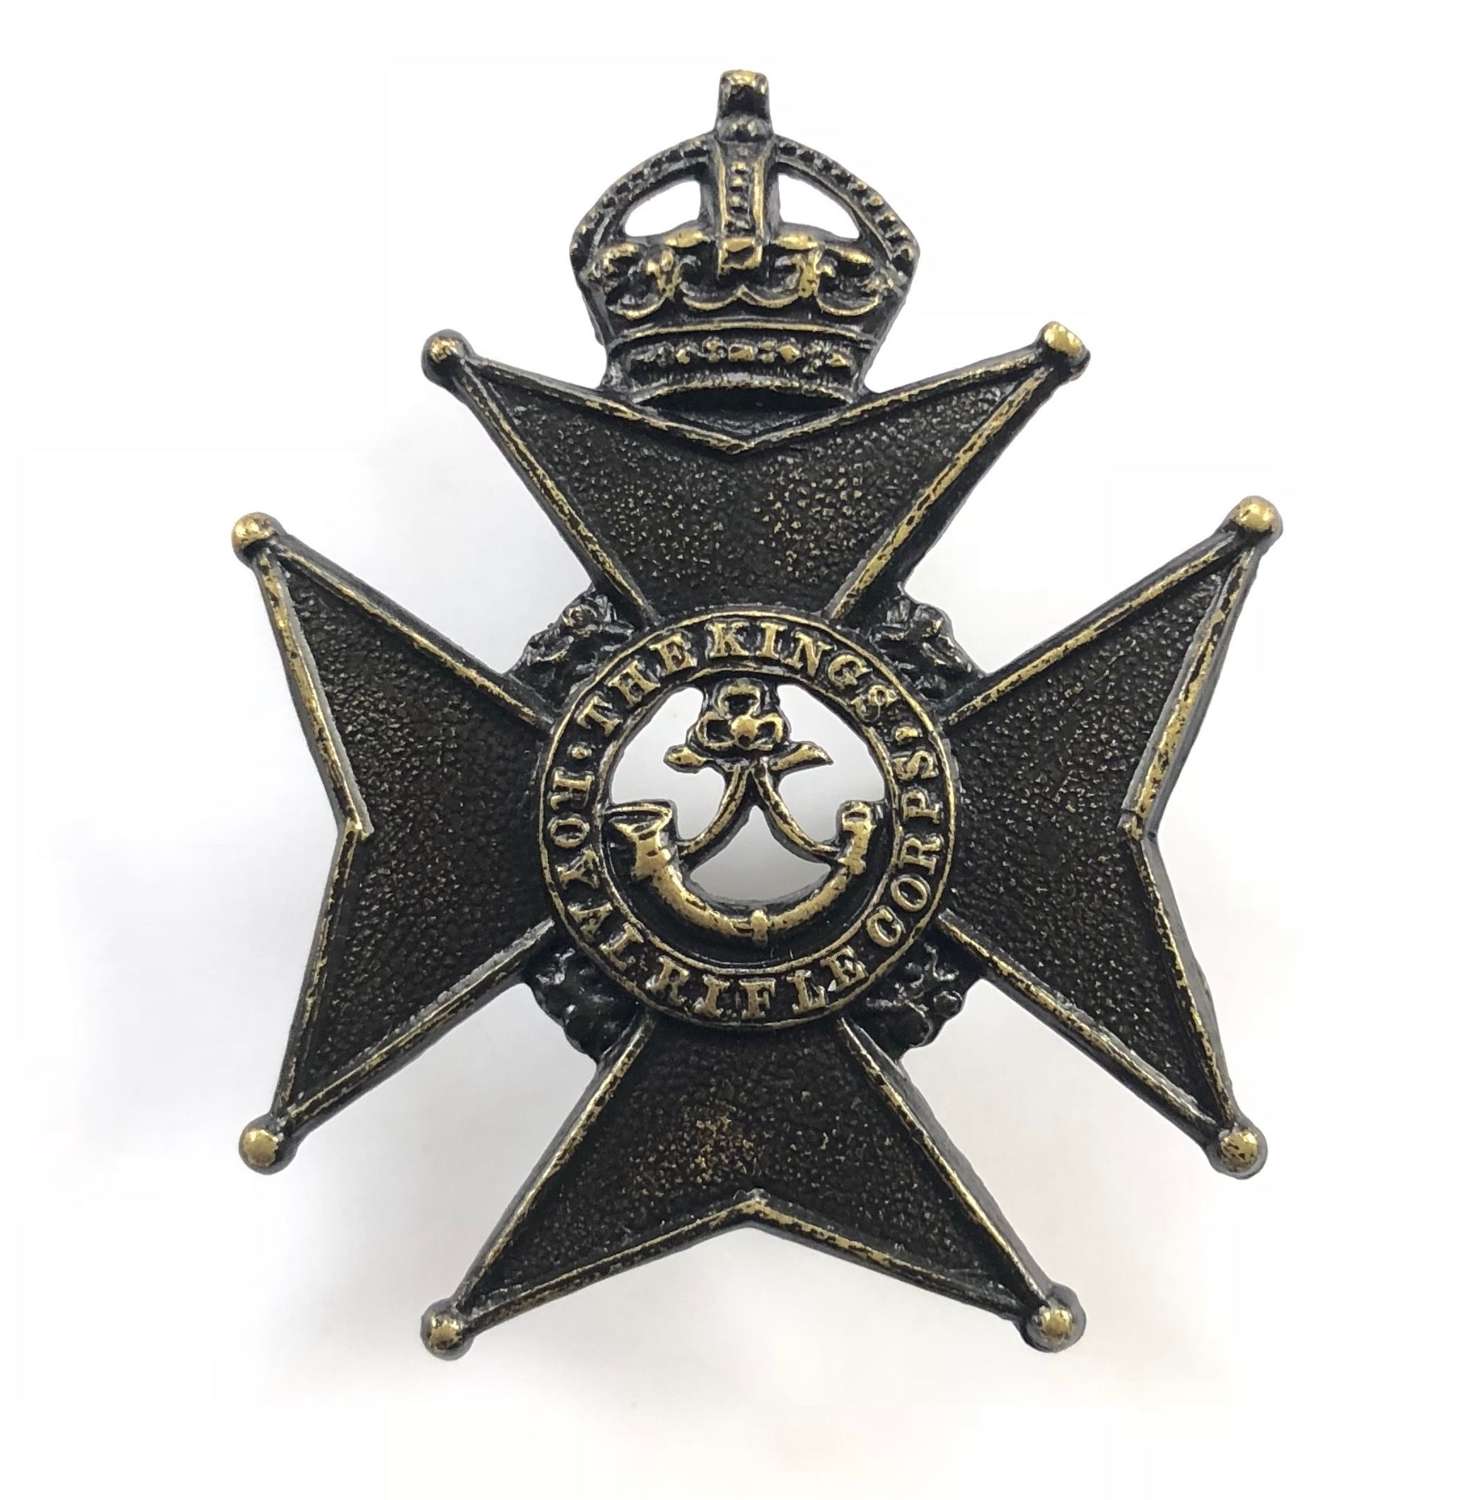 King’s Royal Rifle Corps Militia Edwardian cap badge circa 1901-08